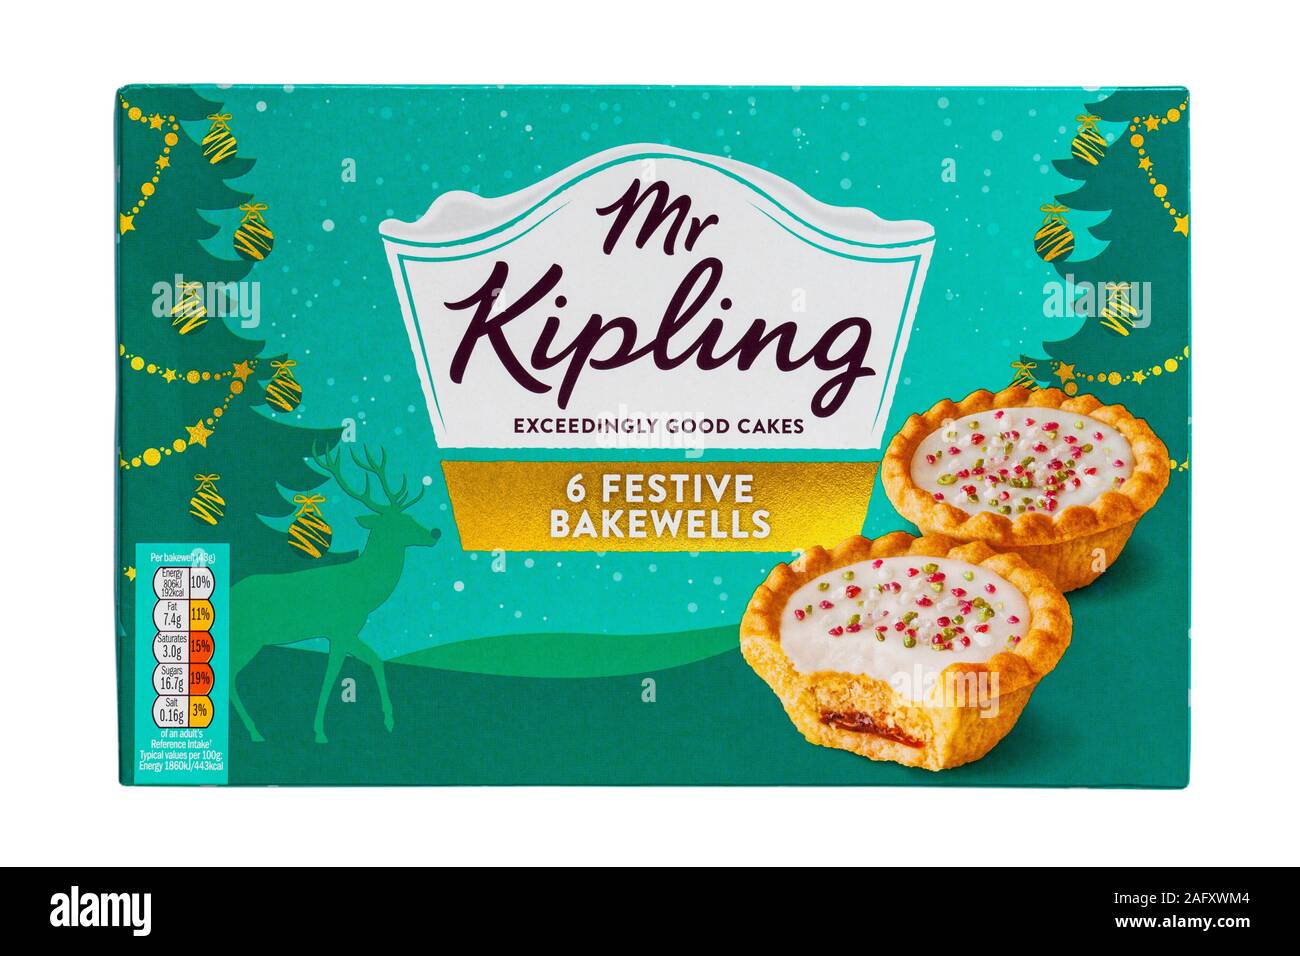 Box of Mr Kipling 6 Festive Bakewells exceedingly good cakes isolated on  white background Stock Photo - Alamy